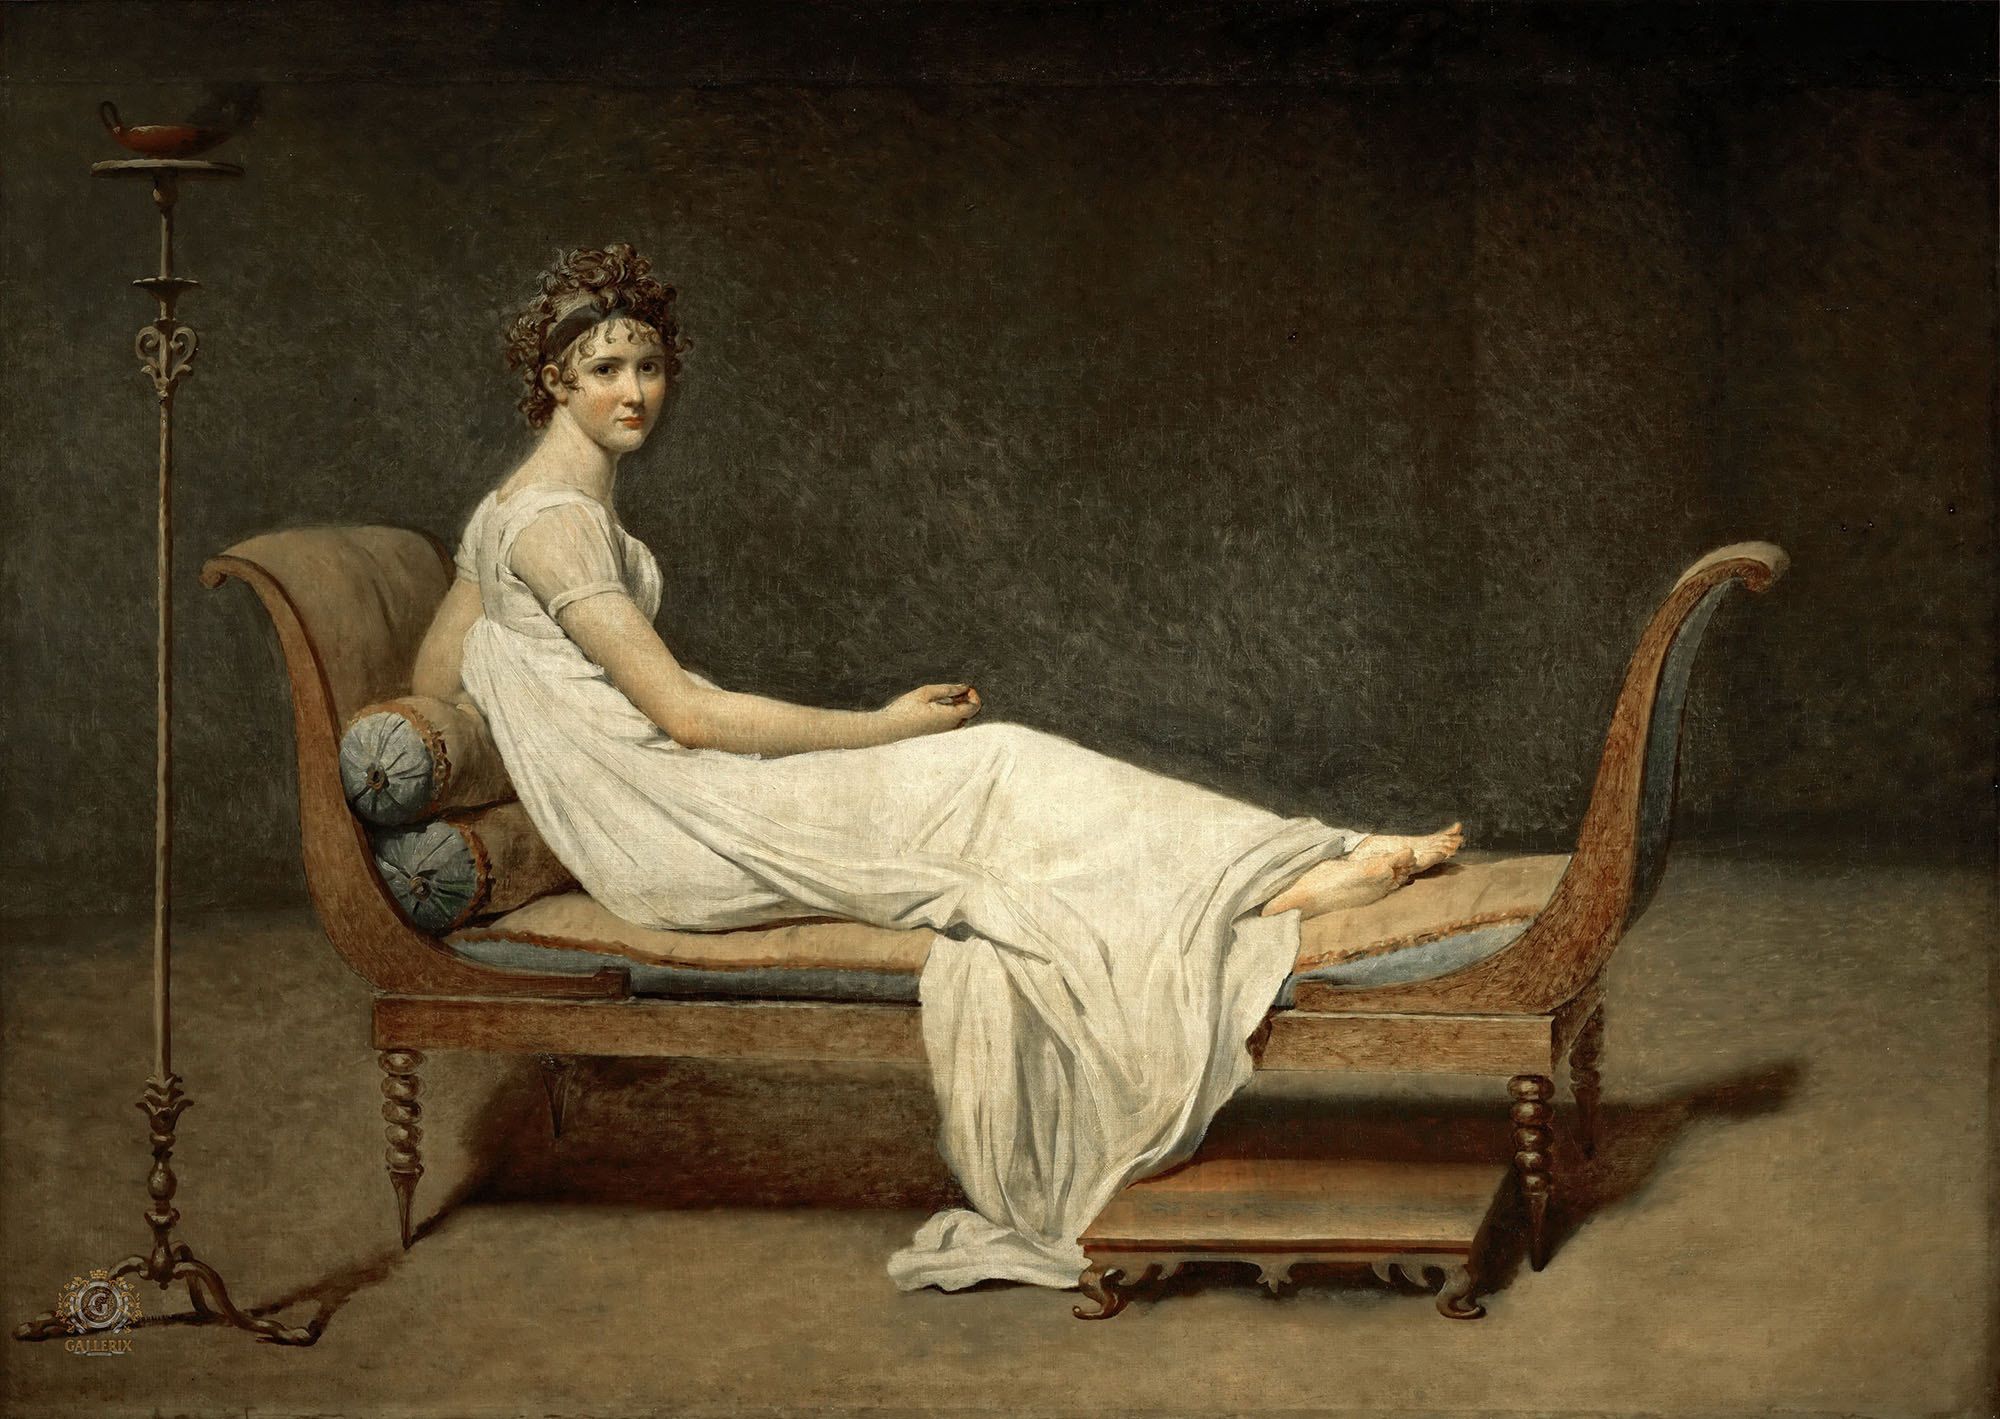 Жан Луи Давид. "Портрет мадам Ж. А. Рекамье". 1800. Лувр, Париж.